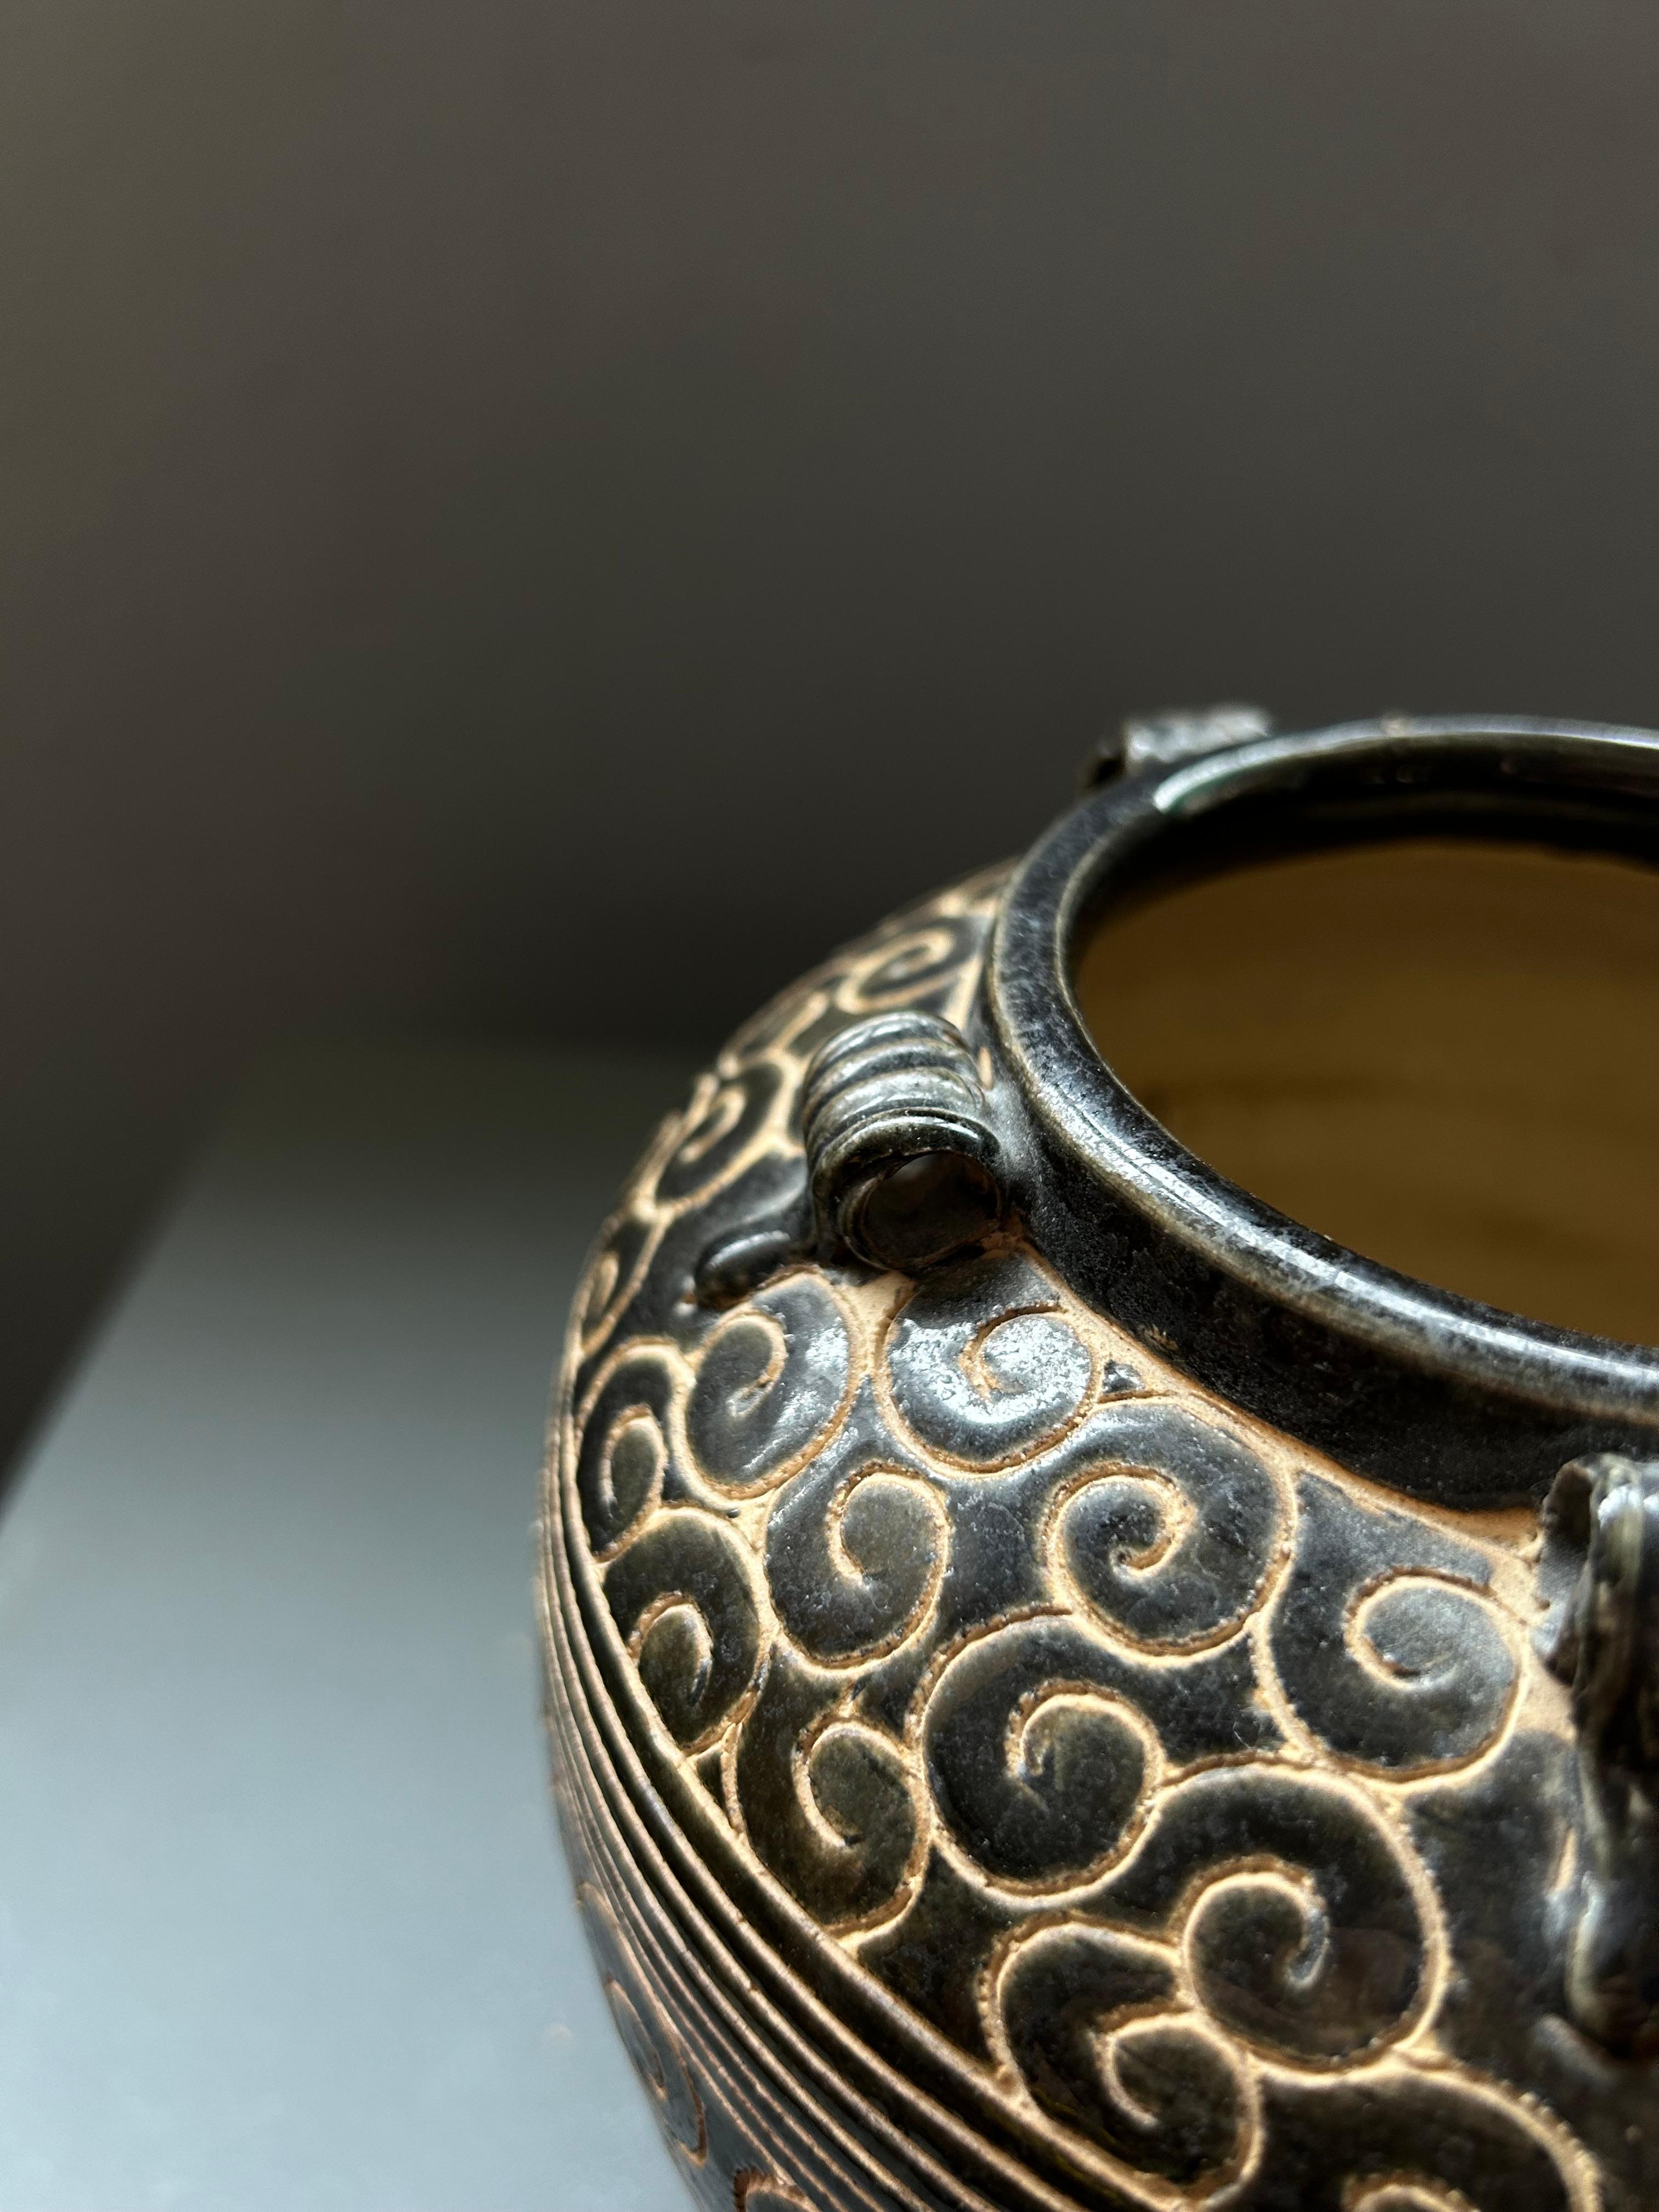 Glazed Scandinavian arts and crafts vase